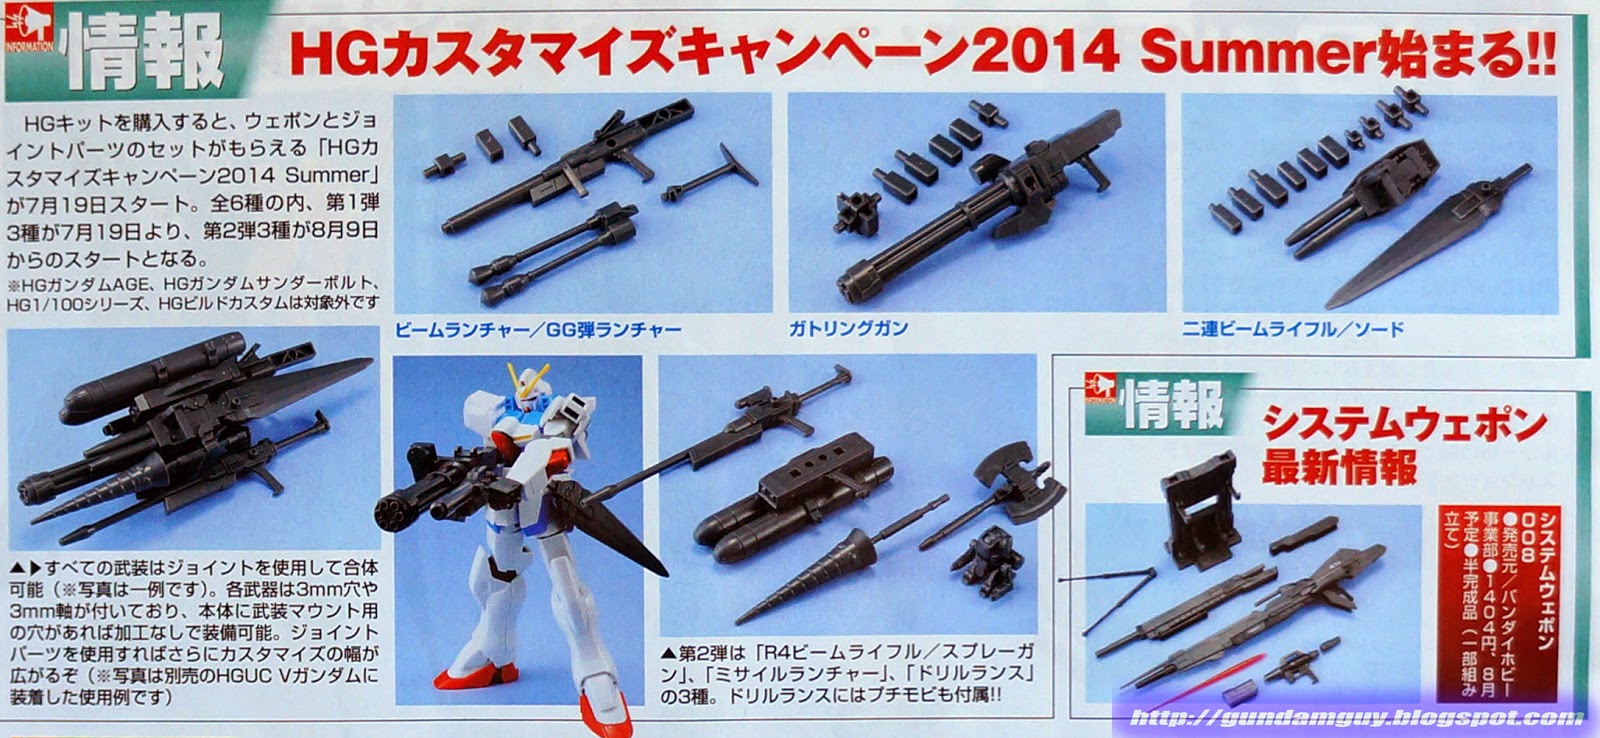 Bandai Gundam HG 1/144 Customize Campaign 2014 Summer A Beam Launcher RX-78-2 